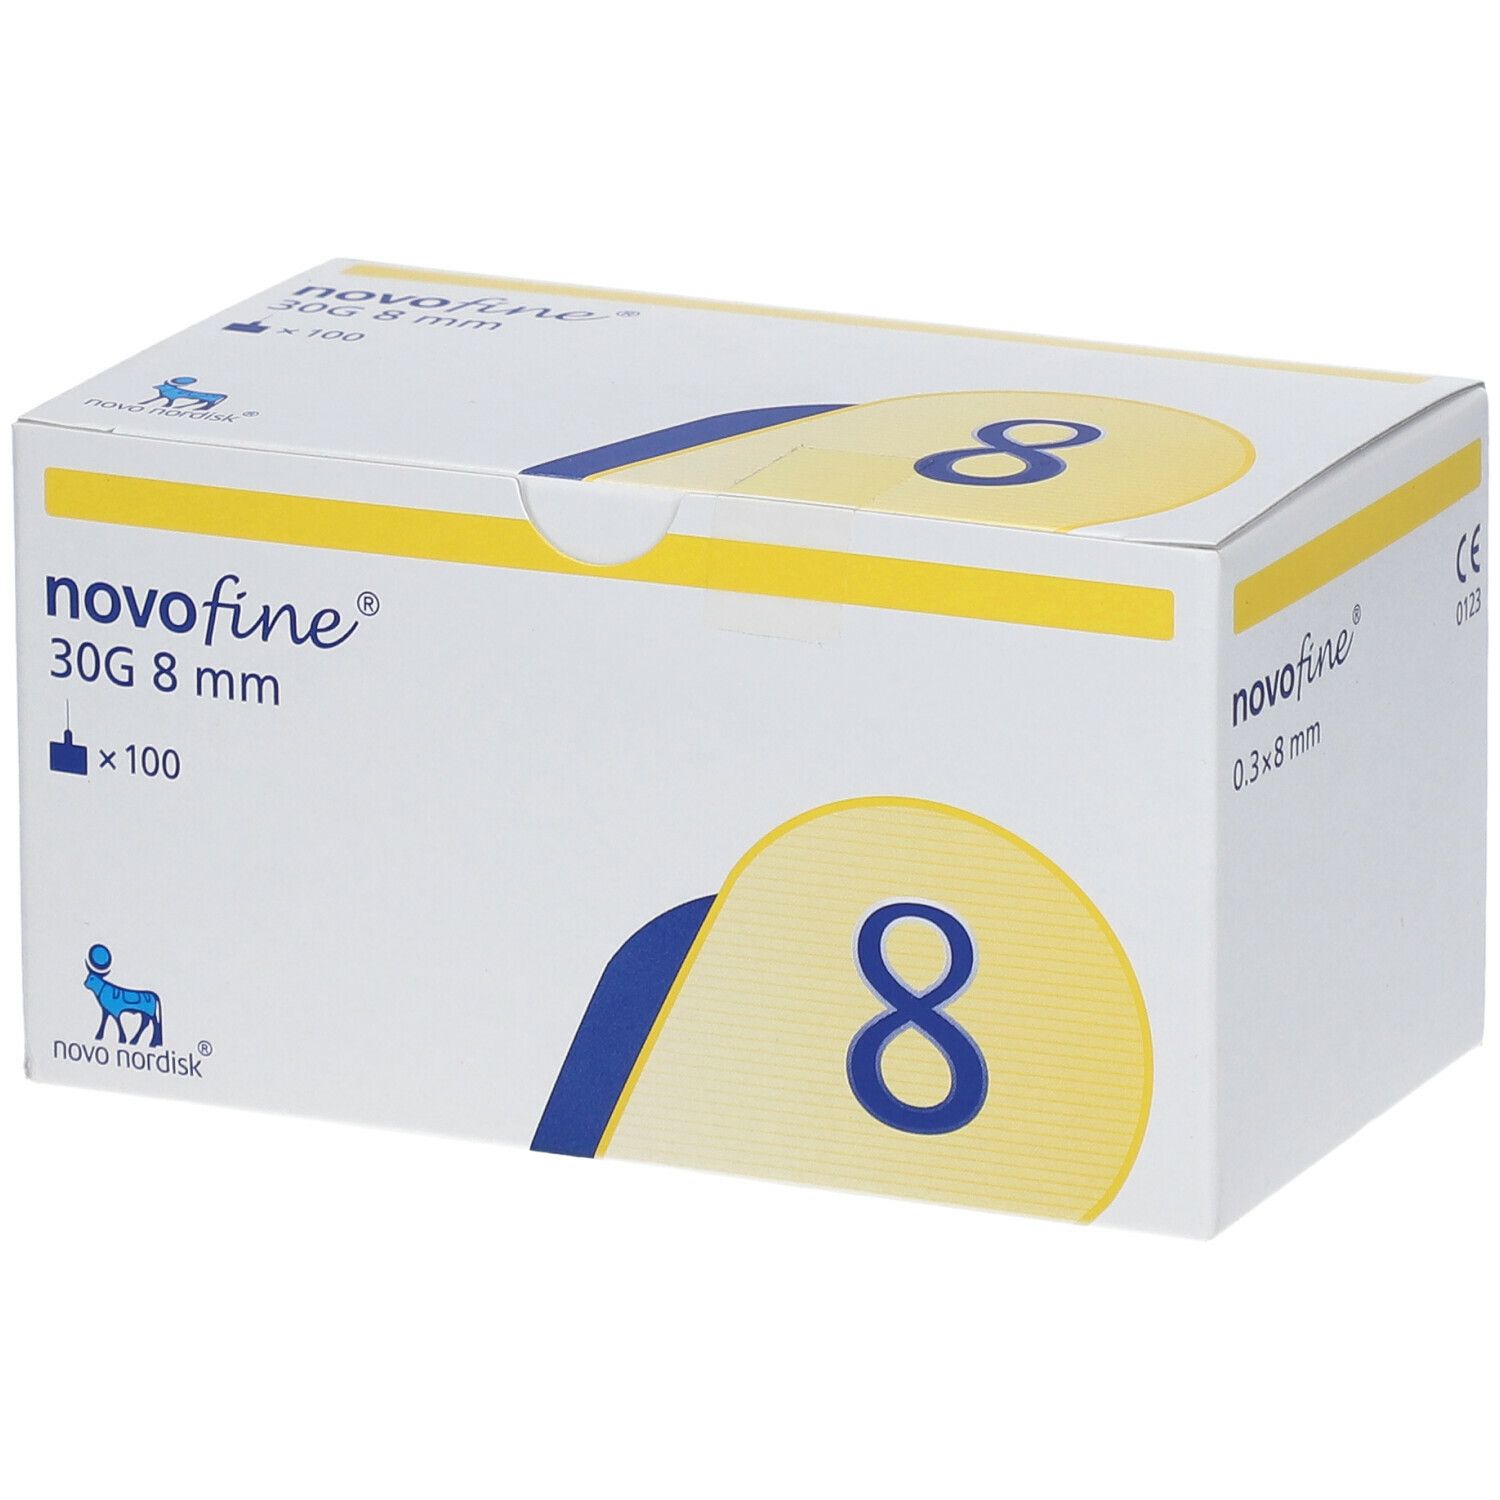 Novofine® 30G 8 mm